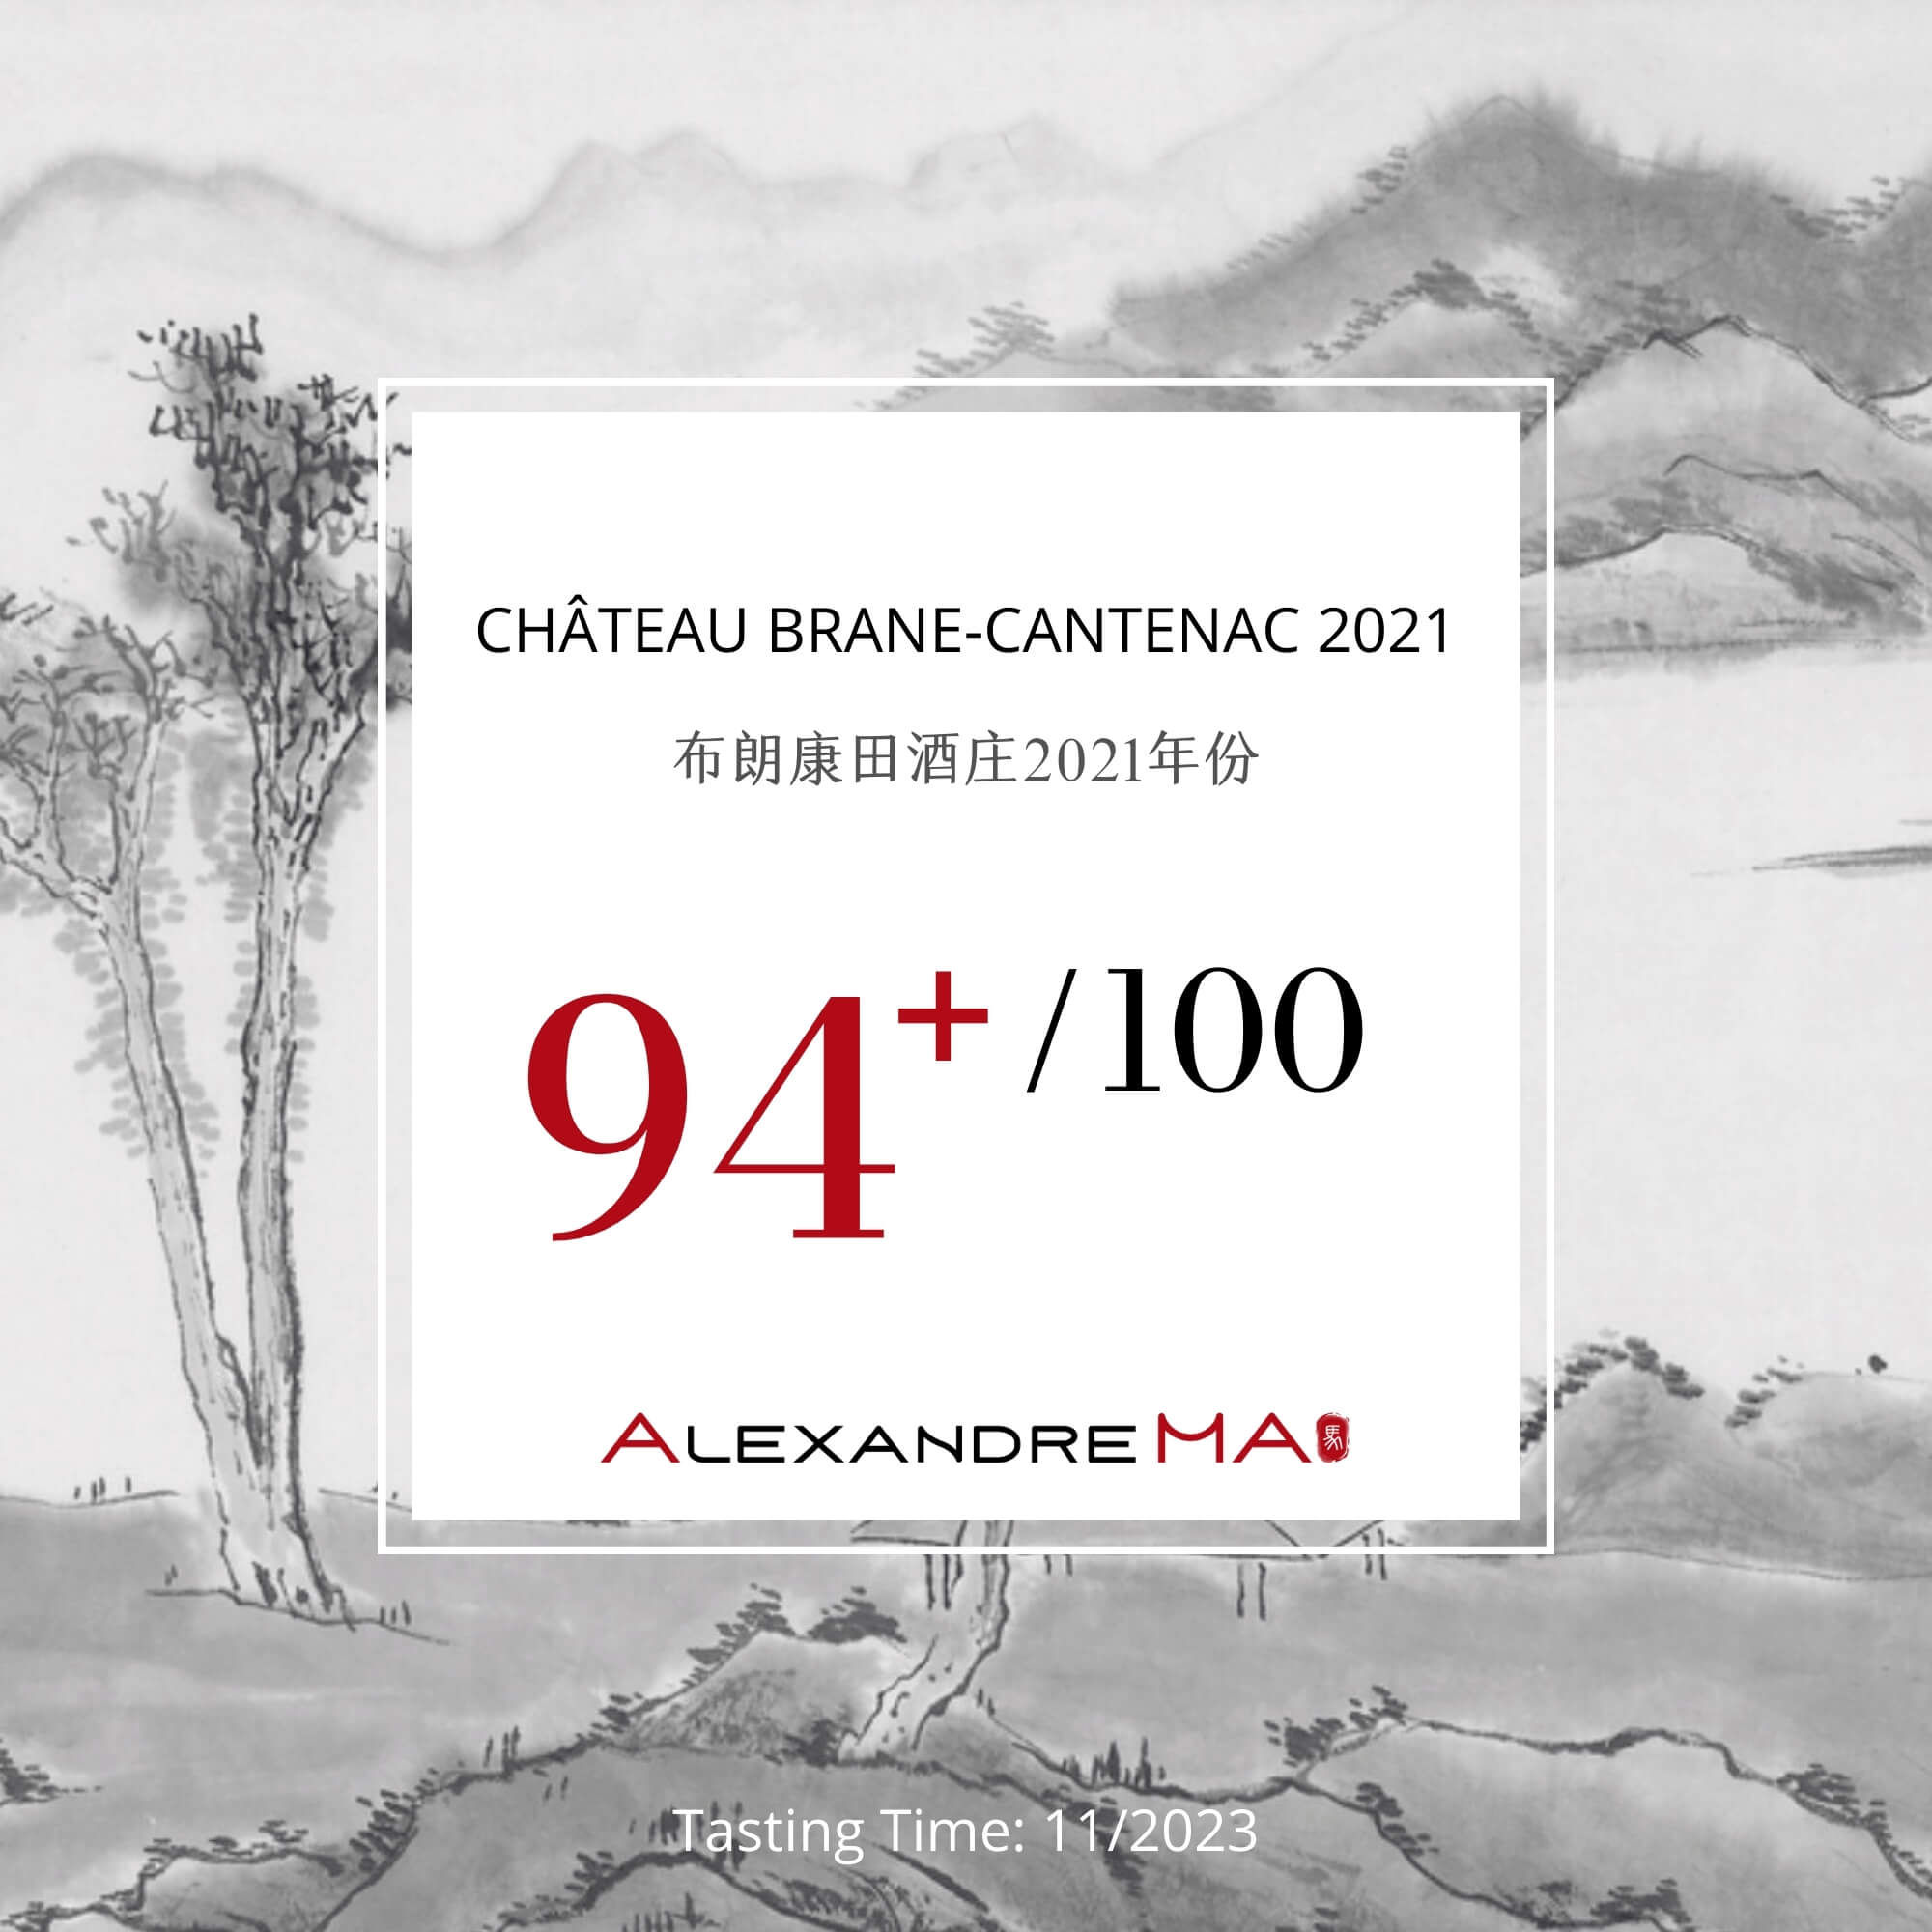 Château Brane-Cantenac 2021 - Alexandre MA